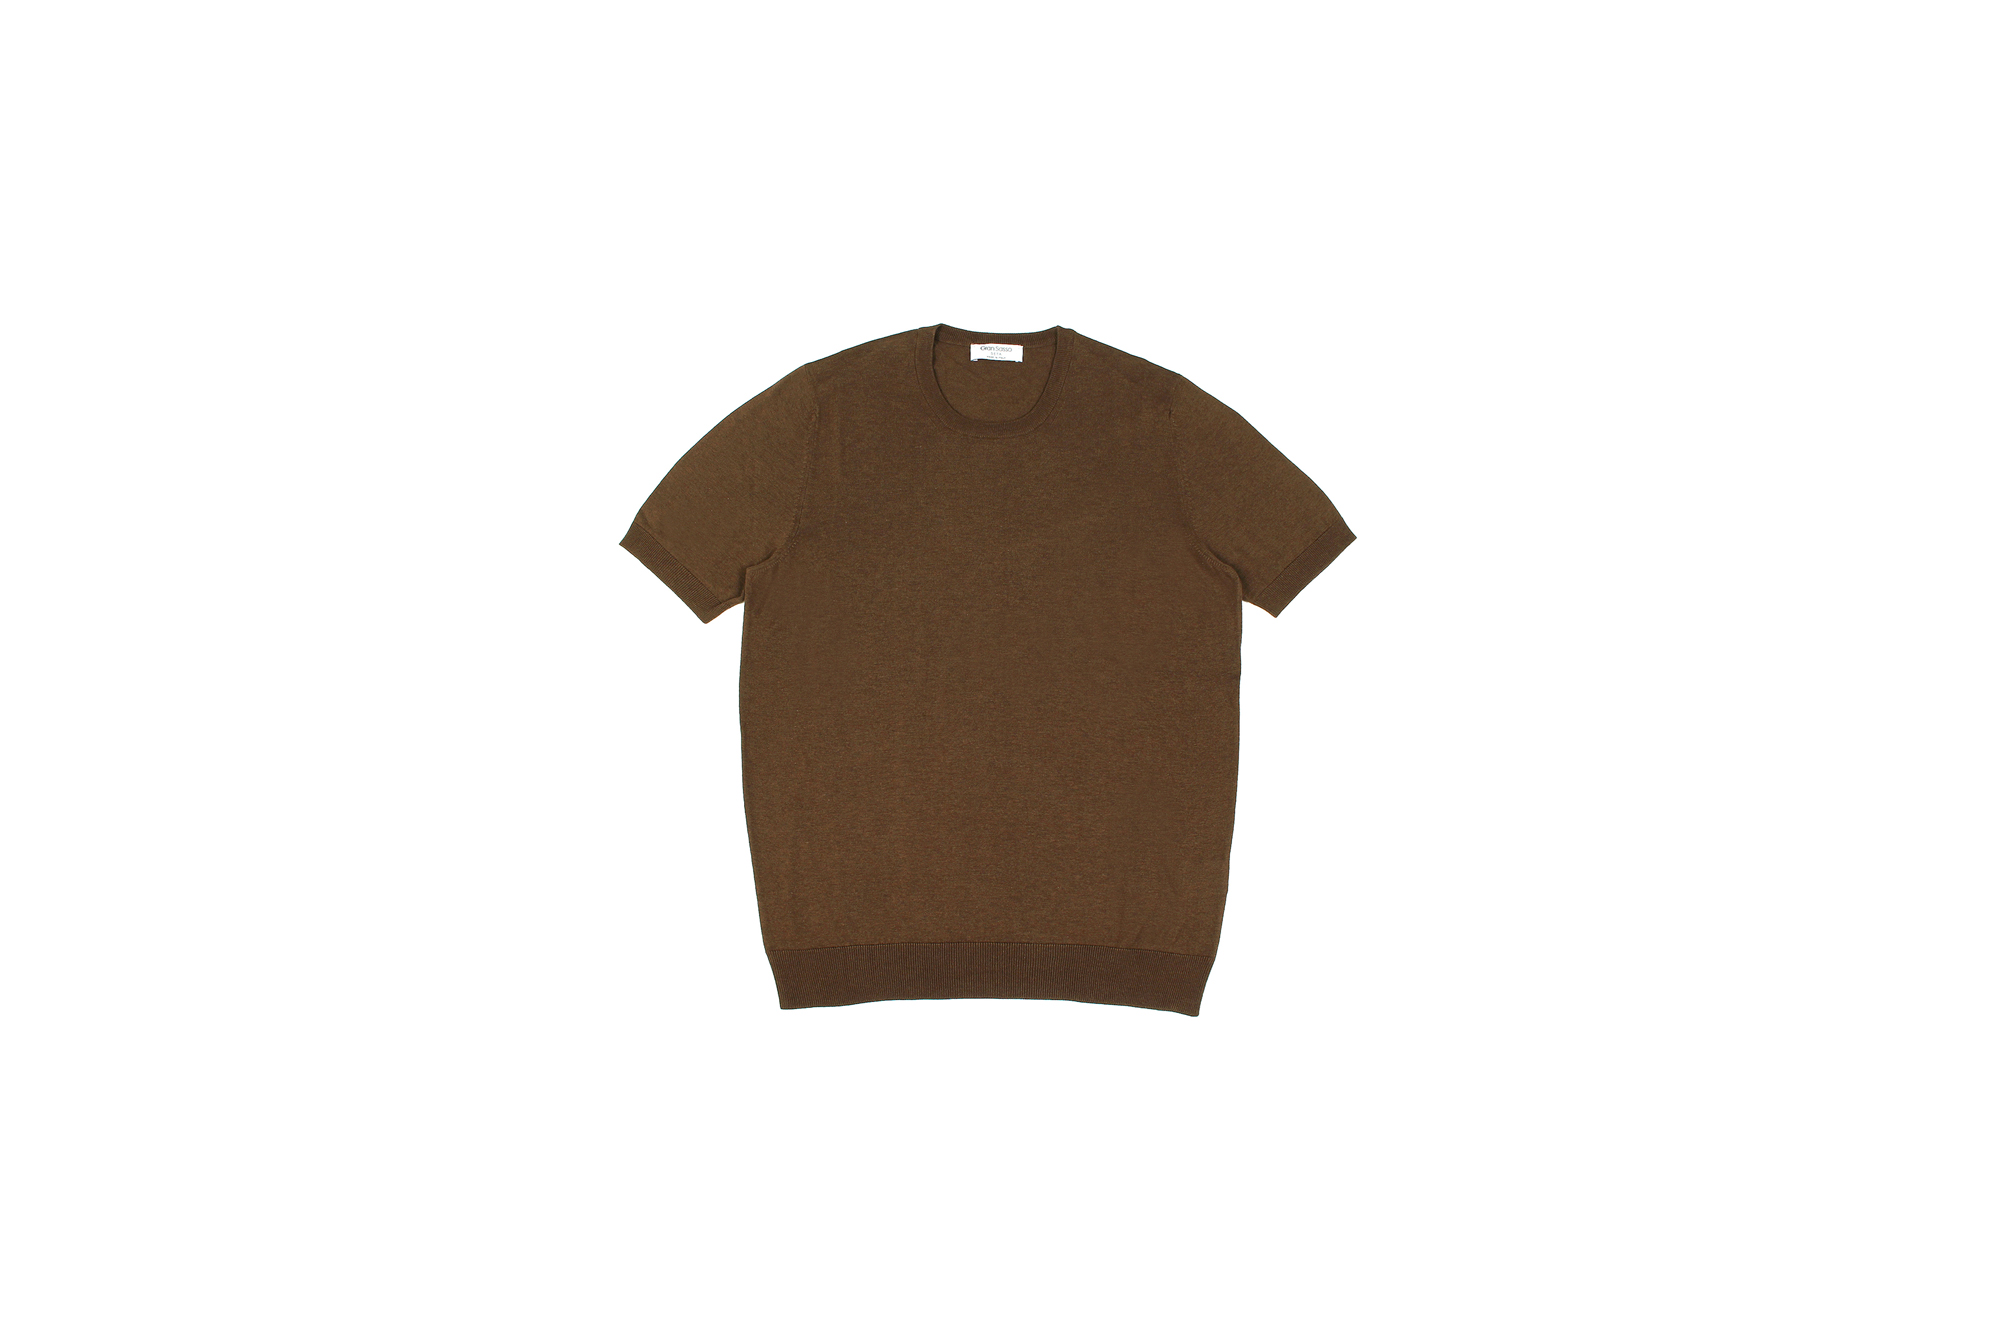 Gran Sasso (グランサッソ) Silk Knit T-shirt (シルクニット Tシャツ) SETA (シルク 100%) ショートスリーブ シルク ニット Tシャツ GOLD (ゴールド・170)　made in italy (イタリア製) 2020 春夏新作 gransasso 愛知 名古屋 altoediritto アルトエデリット